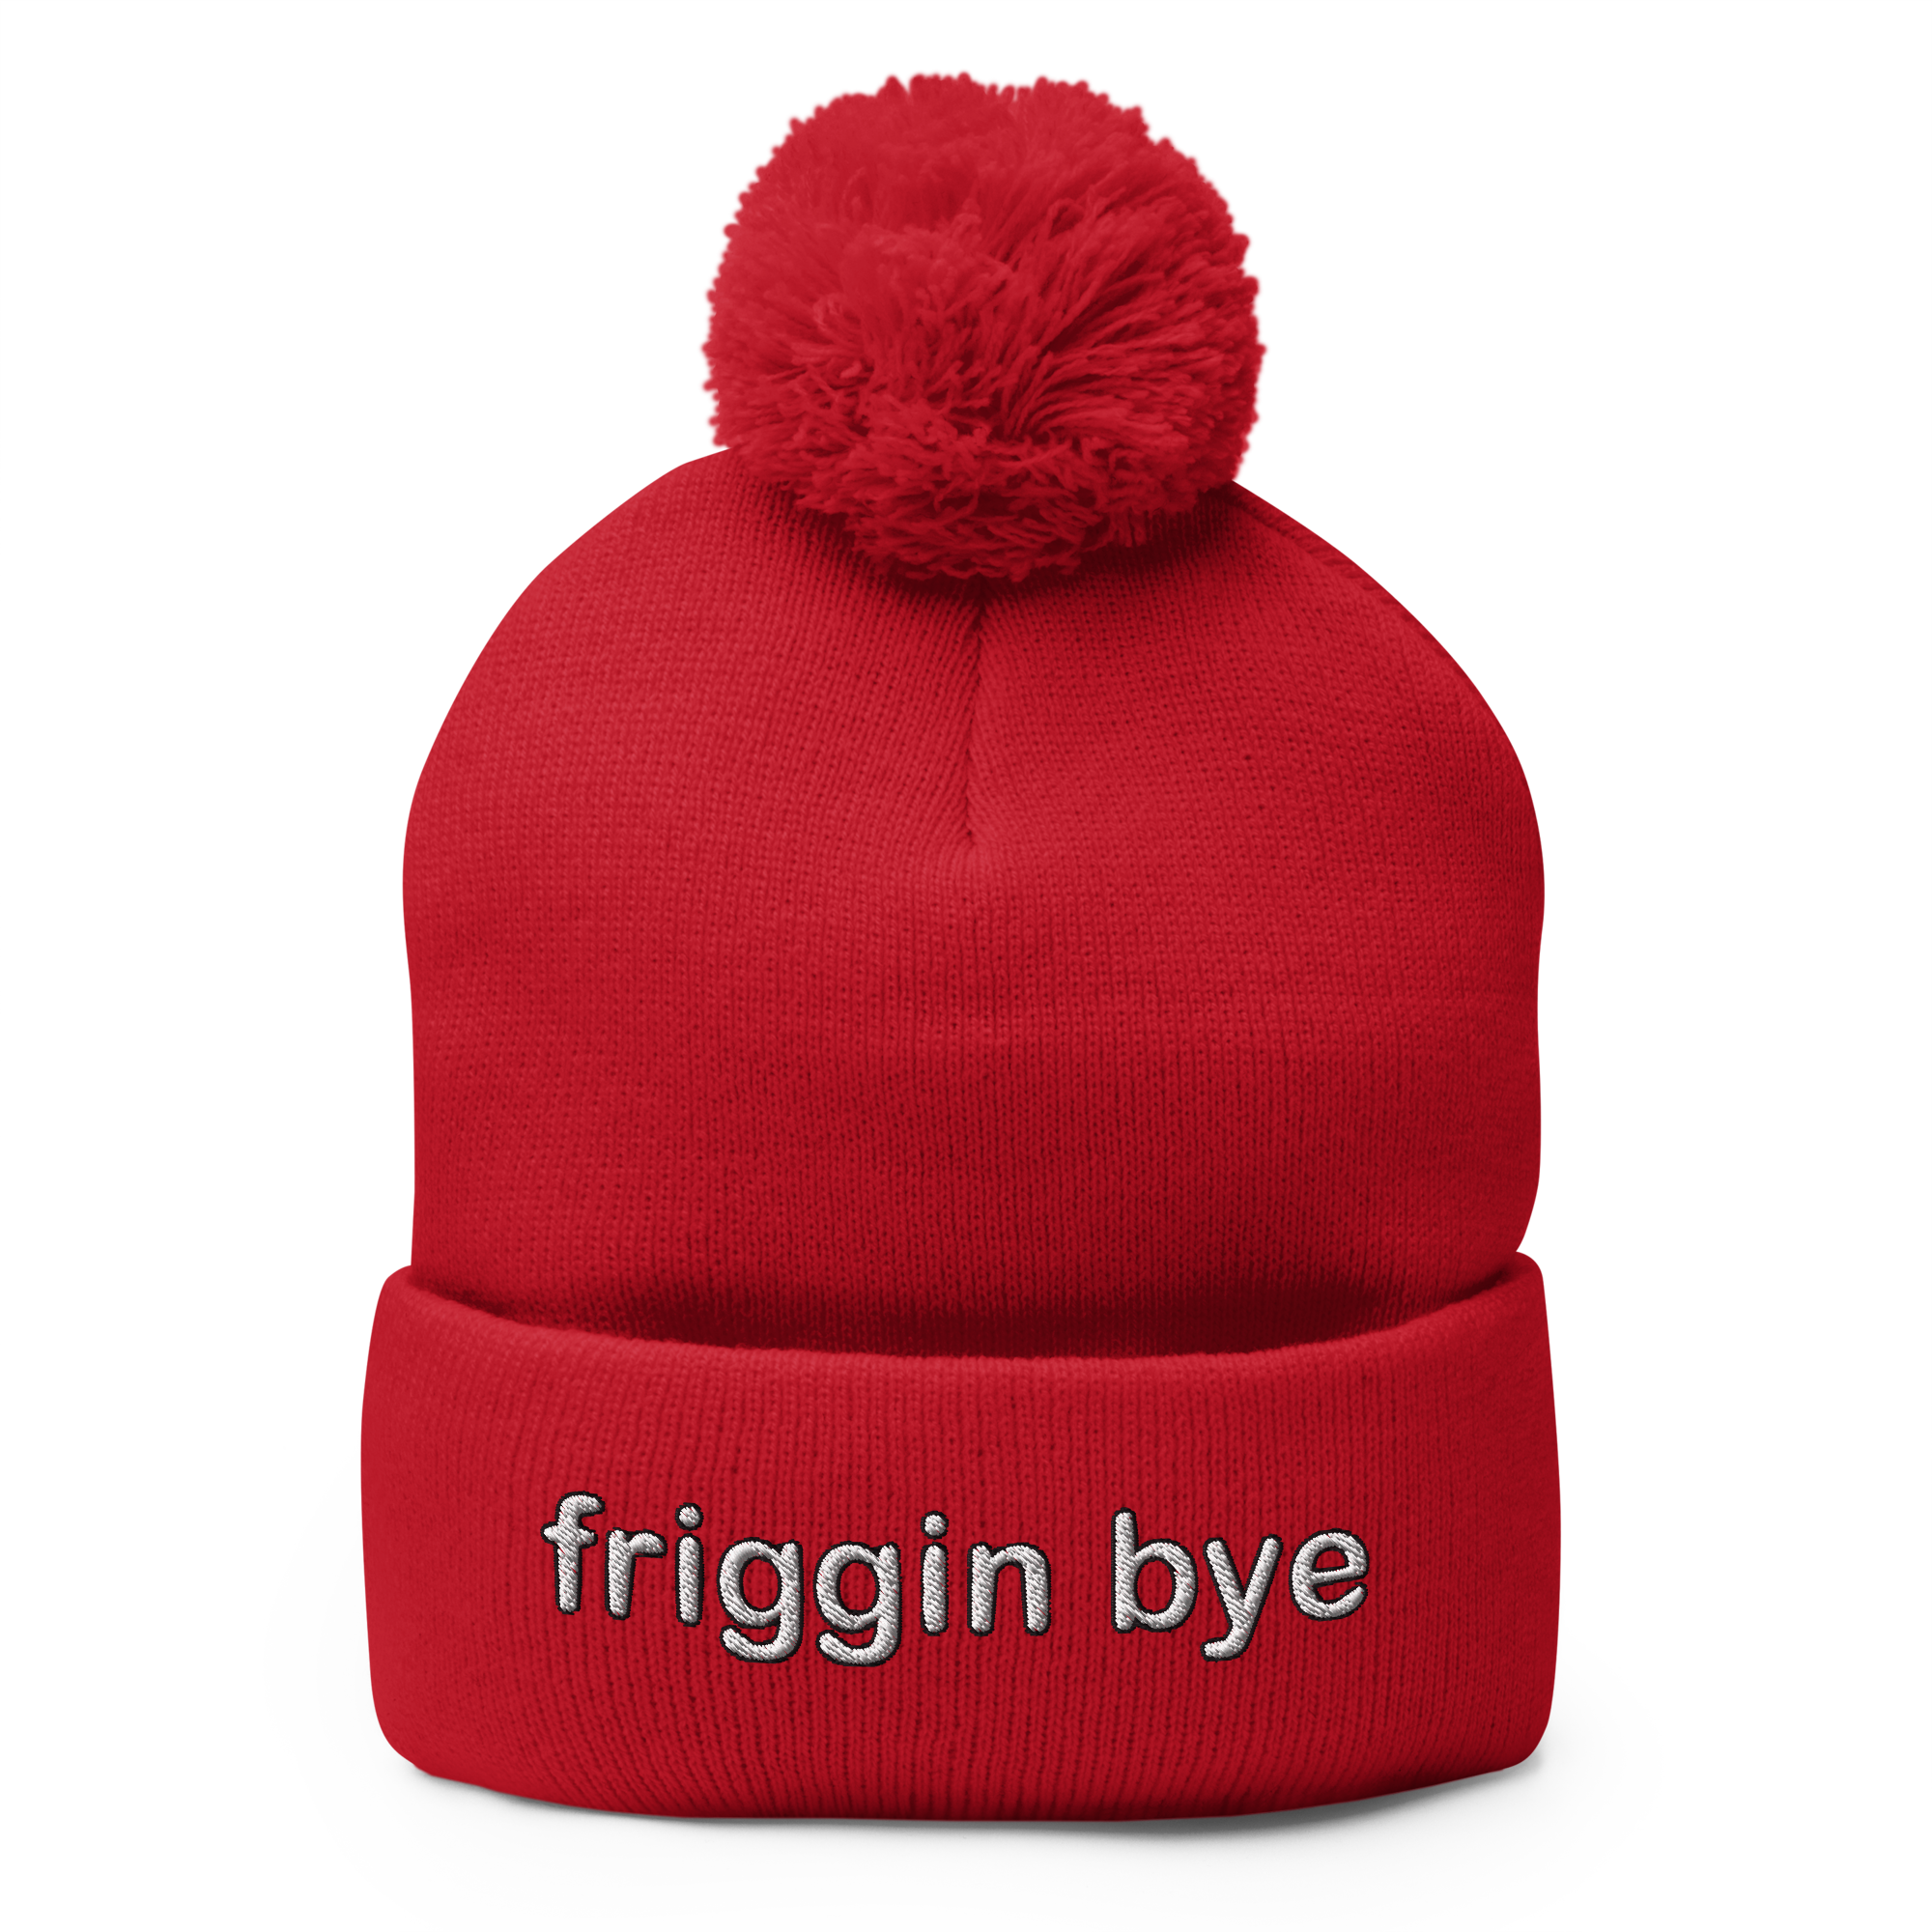 "Friggin Bye" Embroidered Adult Beanie Pom-Pom Hat